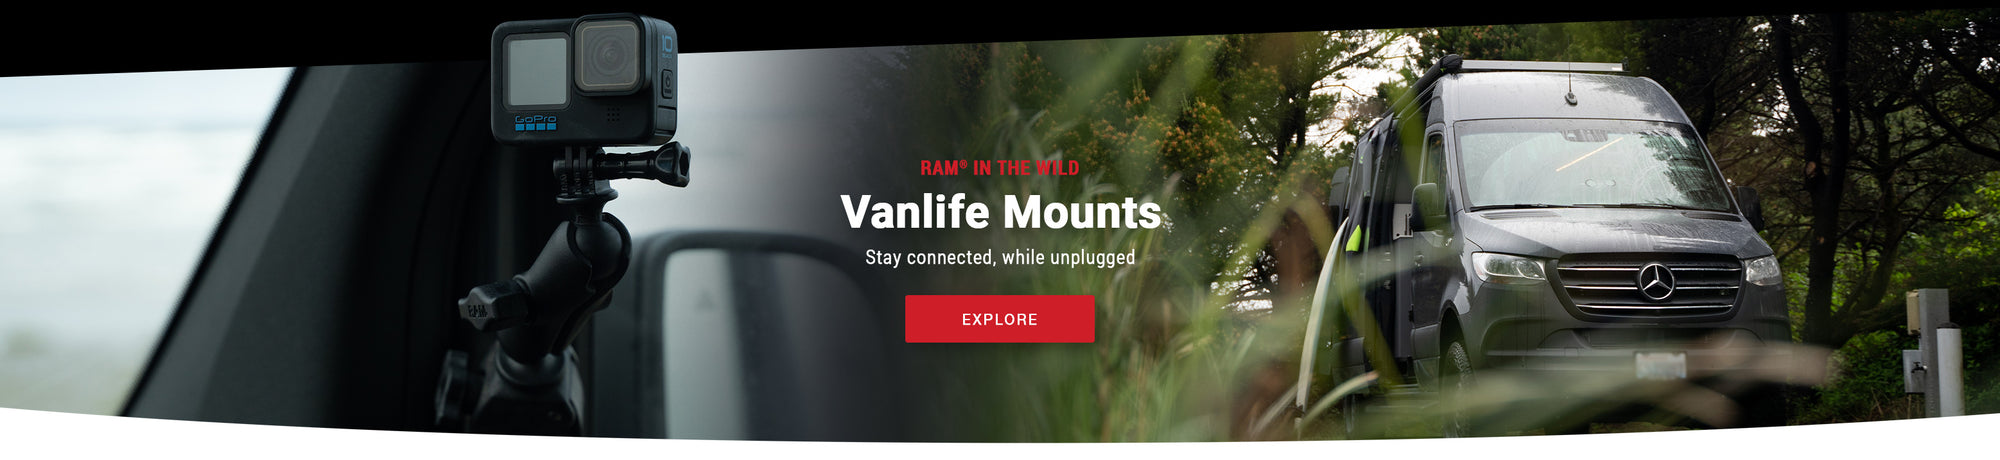 Banner Image for Vanlife Mounts